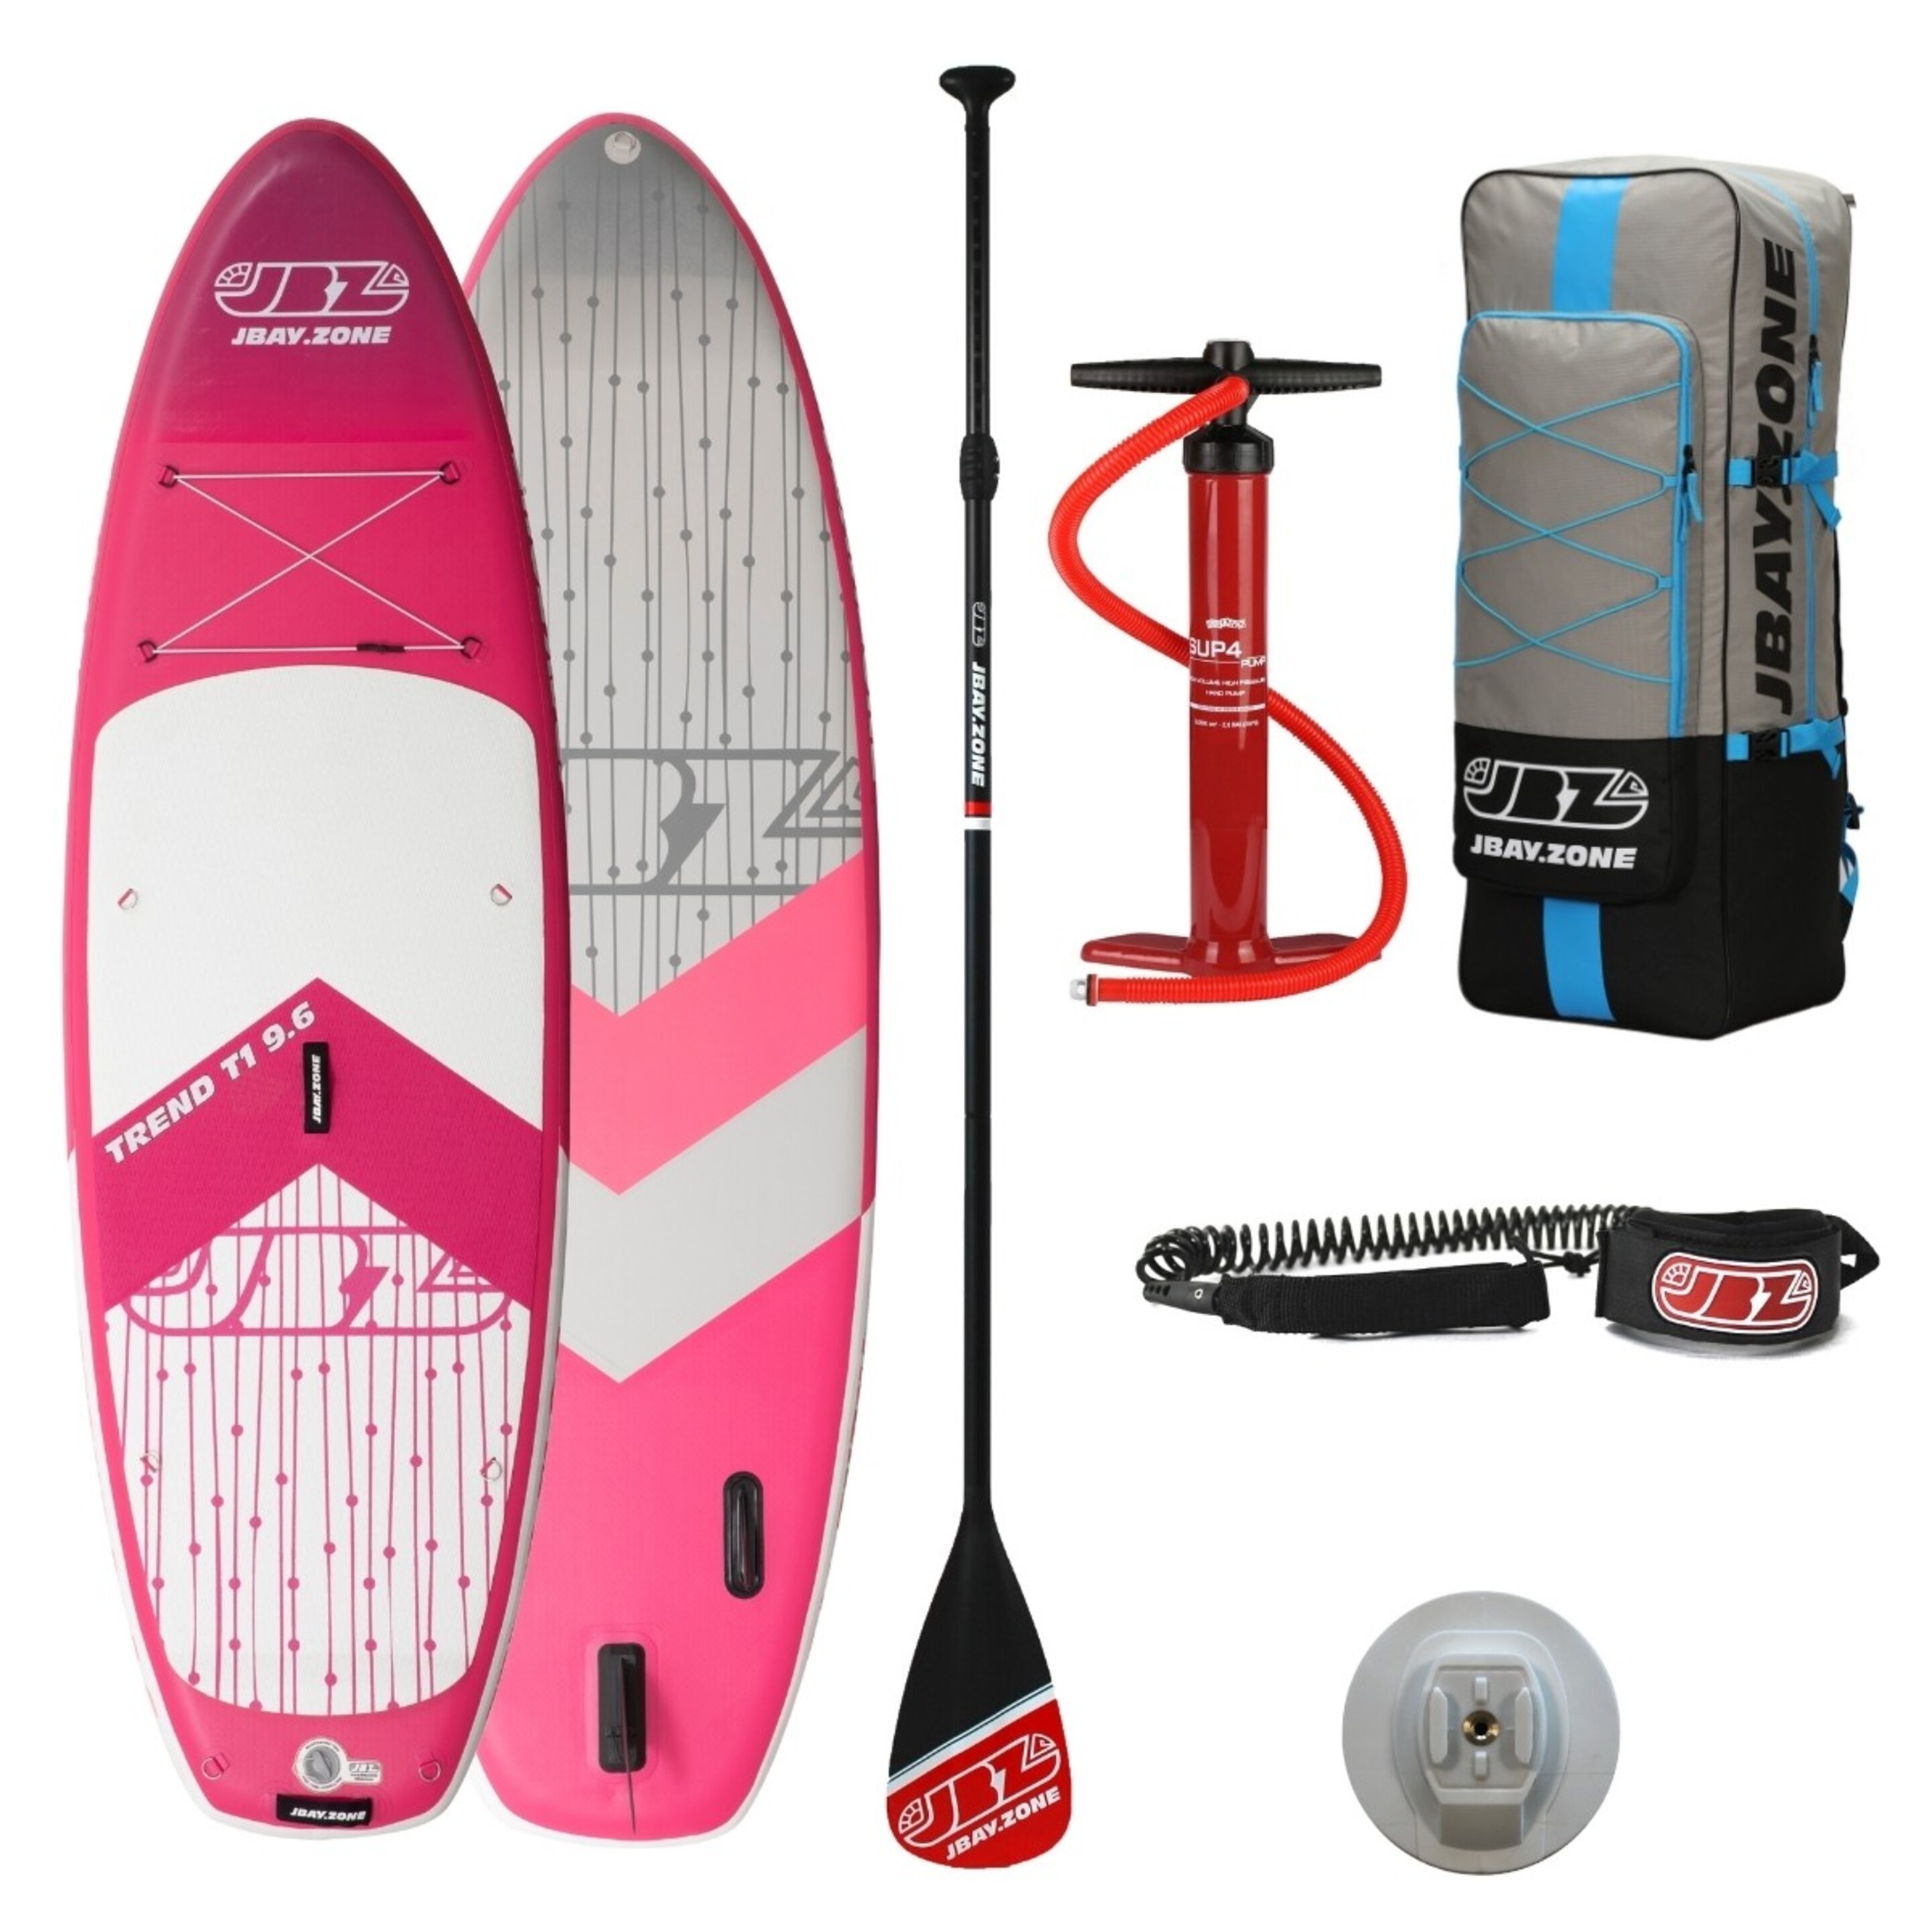 Tabla De Stand Up Paddle Surf Sup Hinchable Jbay.zone Modelo Trend T1 - rosa-rosa-claro - 